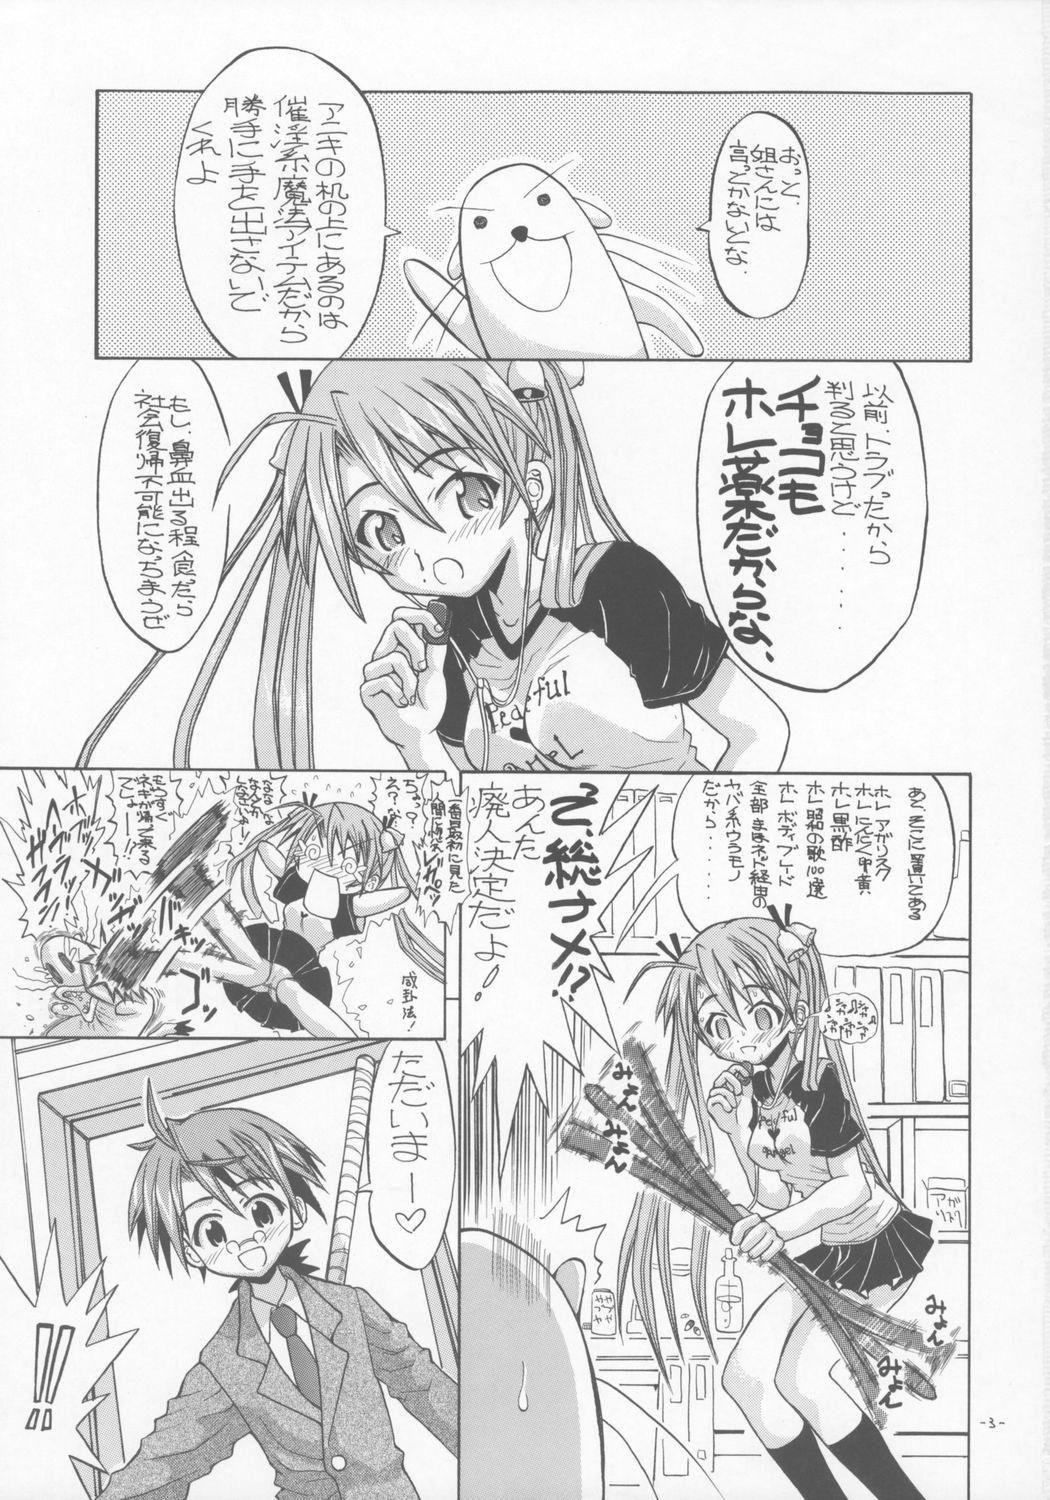 Lesbians AsuNAX! - Mahou sensei negima Kissing - Page 2